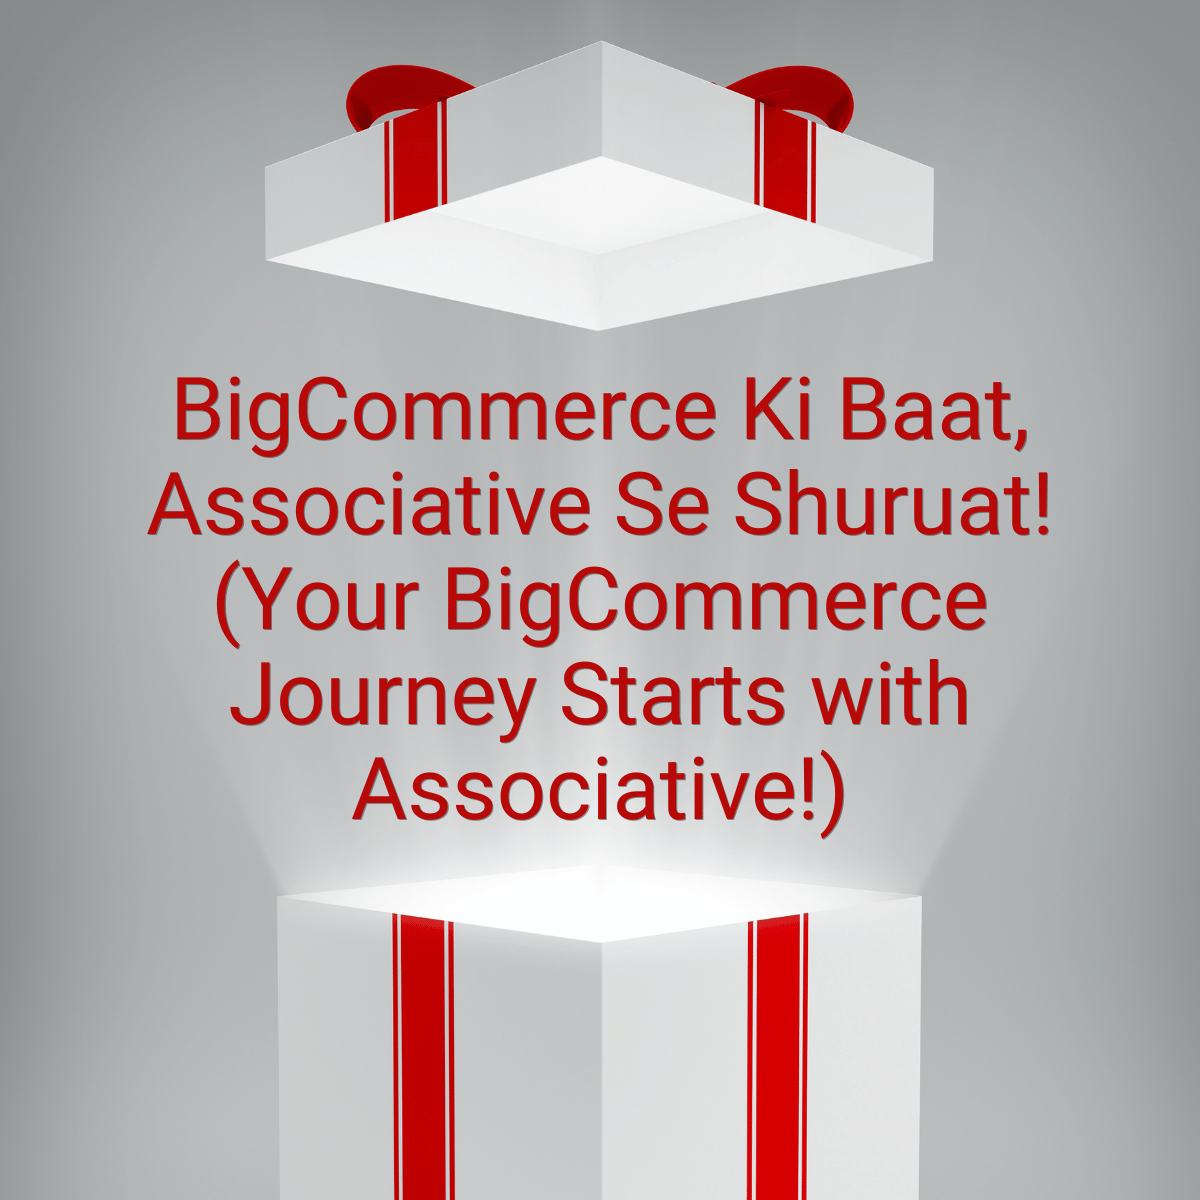 BigCommerce Ki Baat, Associative Se Shuruat! (Your BigCommerce Journey Starts with Associative!)